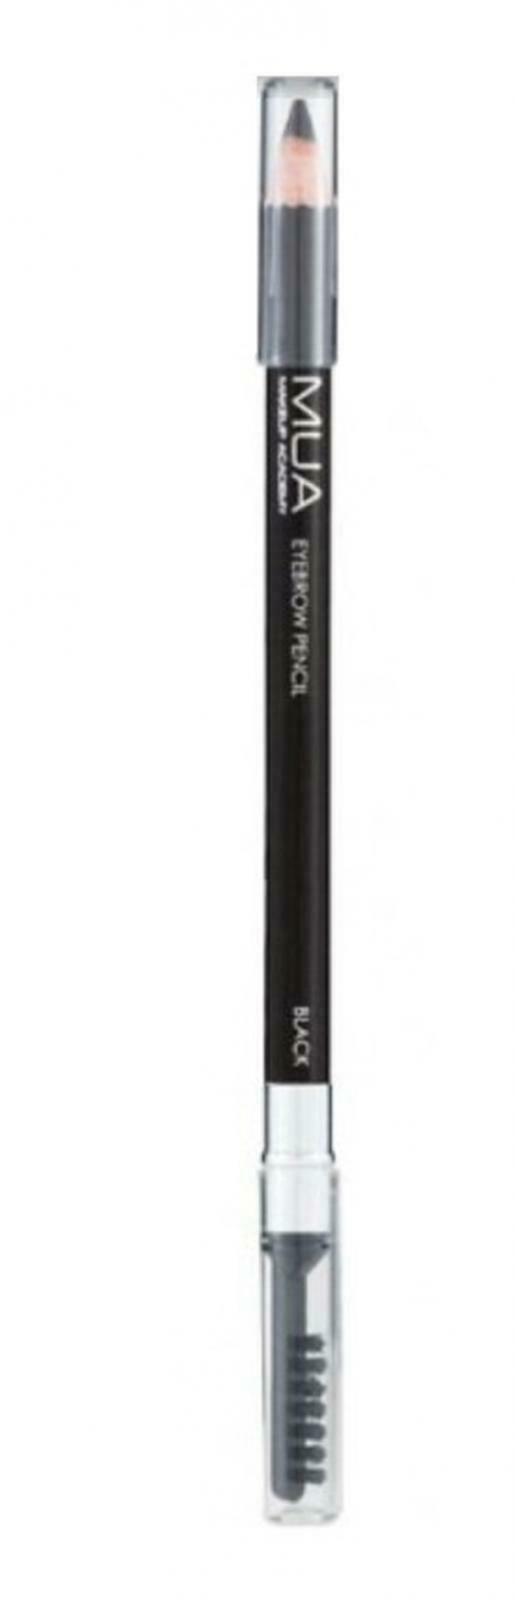 MUA Eyebrow Pencil Define & Groom Brows with Brush